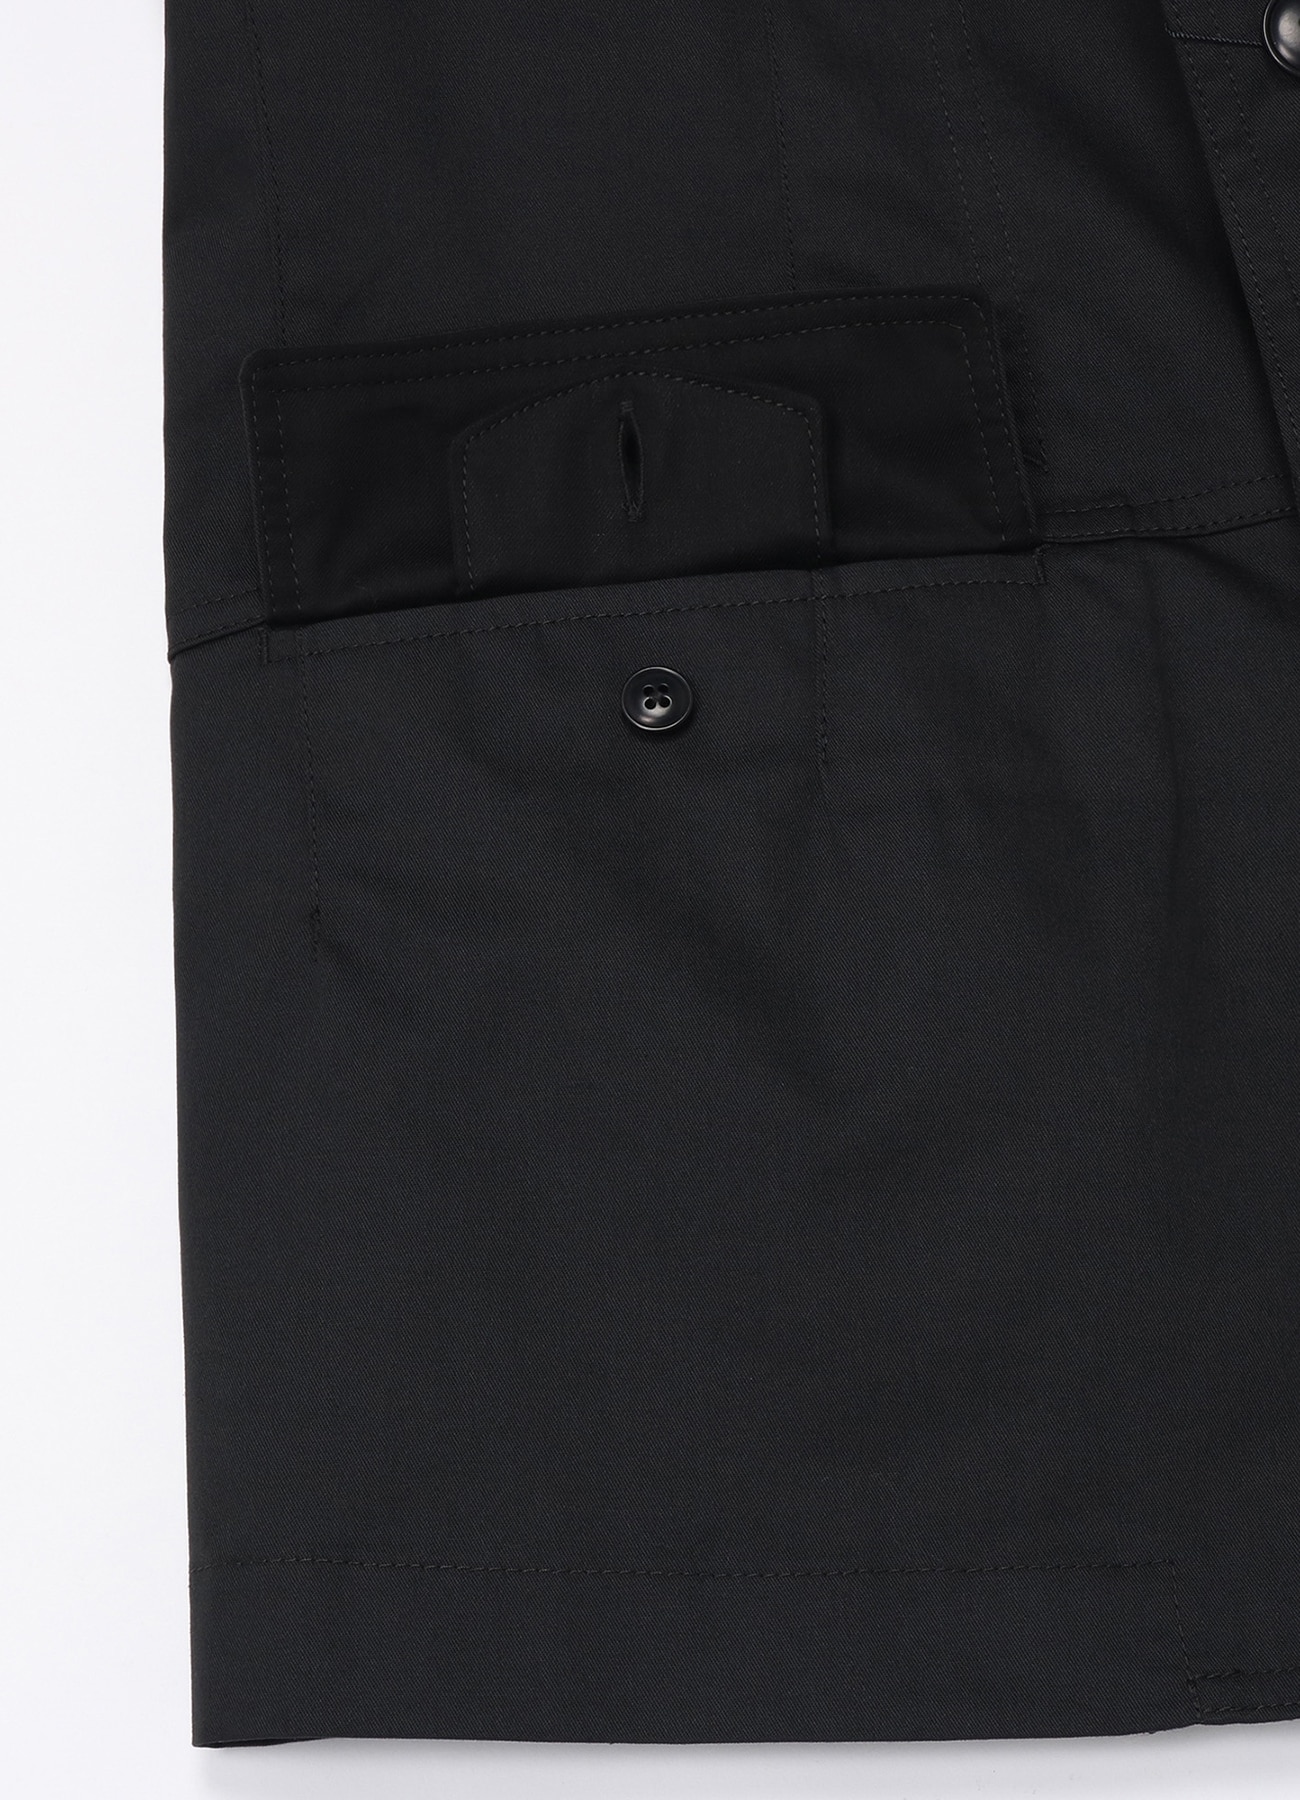 T/C Twill 2B Tailored Collar Jacket(XS BLACK): YOHJI YAMAMOTO